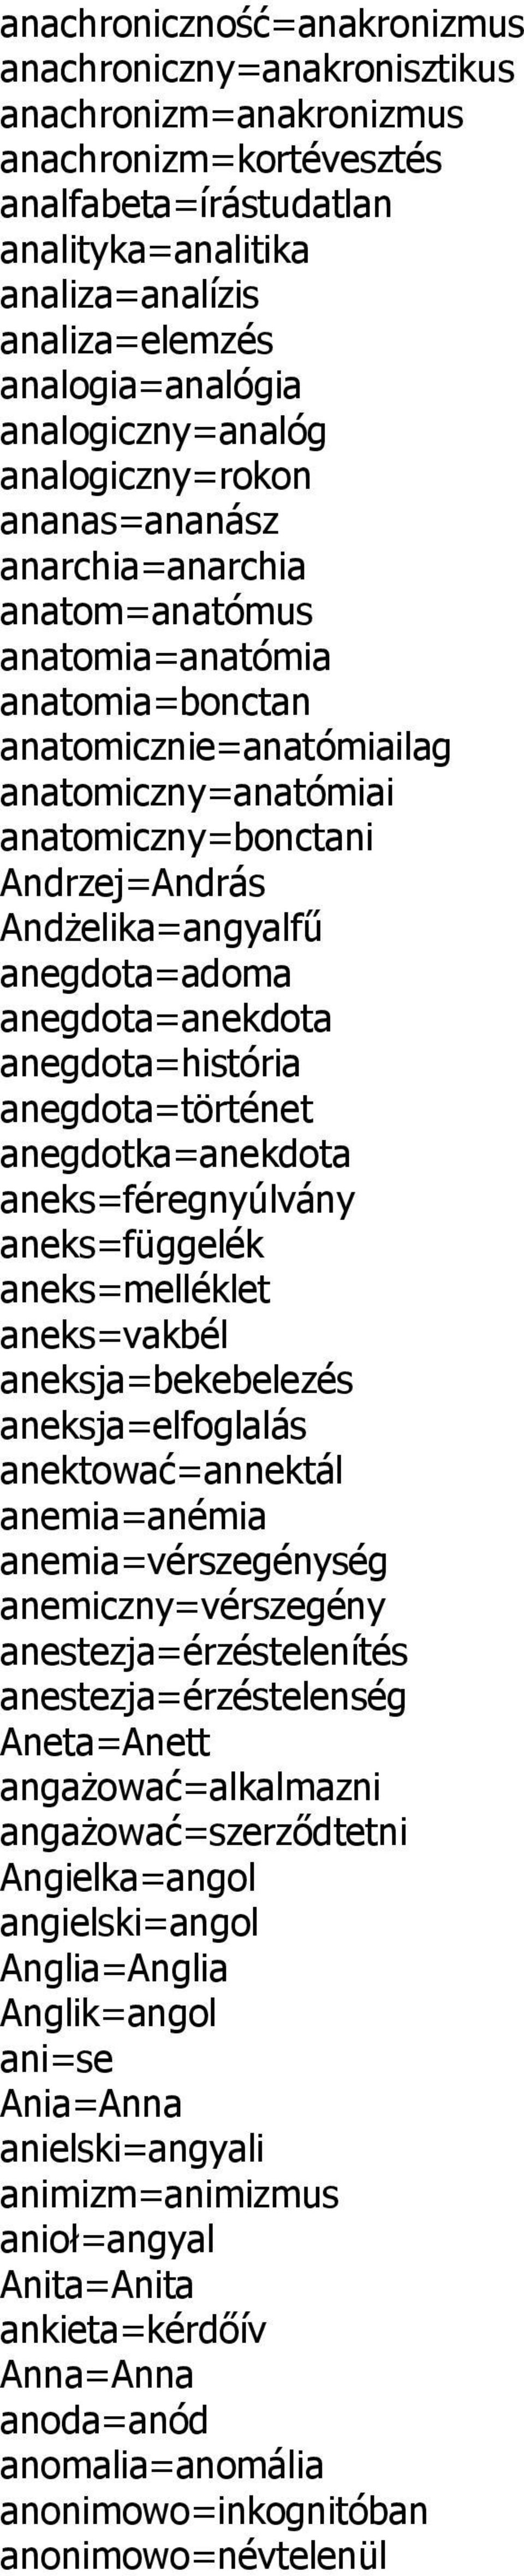 anatomiczny=bonctani Andrzej=András Andżelika=angyalfű anegdota=adoma anegdota=anekdota anegdota=história anegdota=történet anegdotka=anekdota aneks=féregnyúlvány aneks=függelék aneks=melléklet